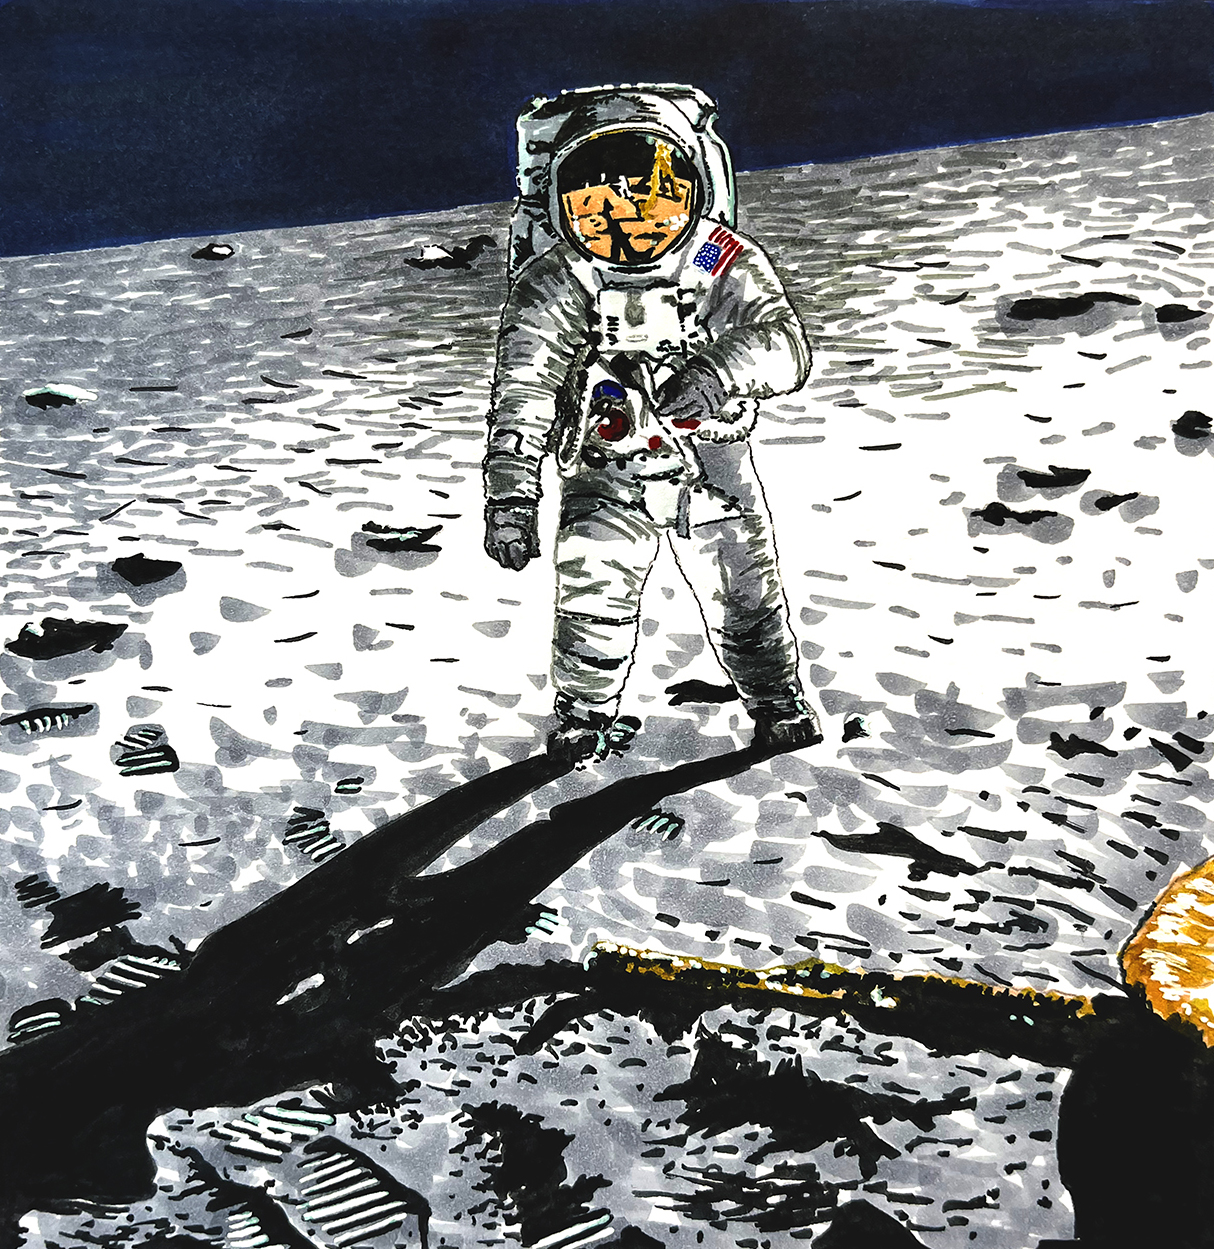 Drawing of Buzz Aldrin moonshot